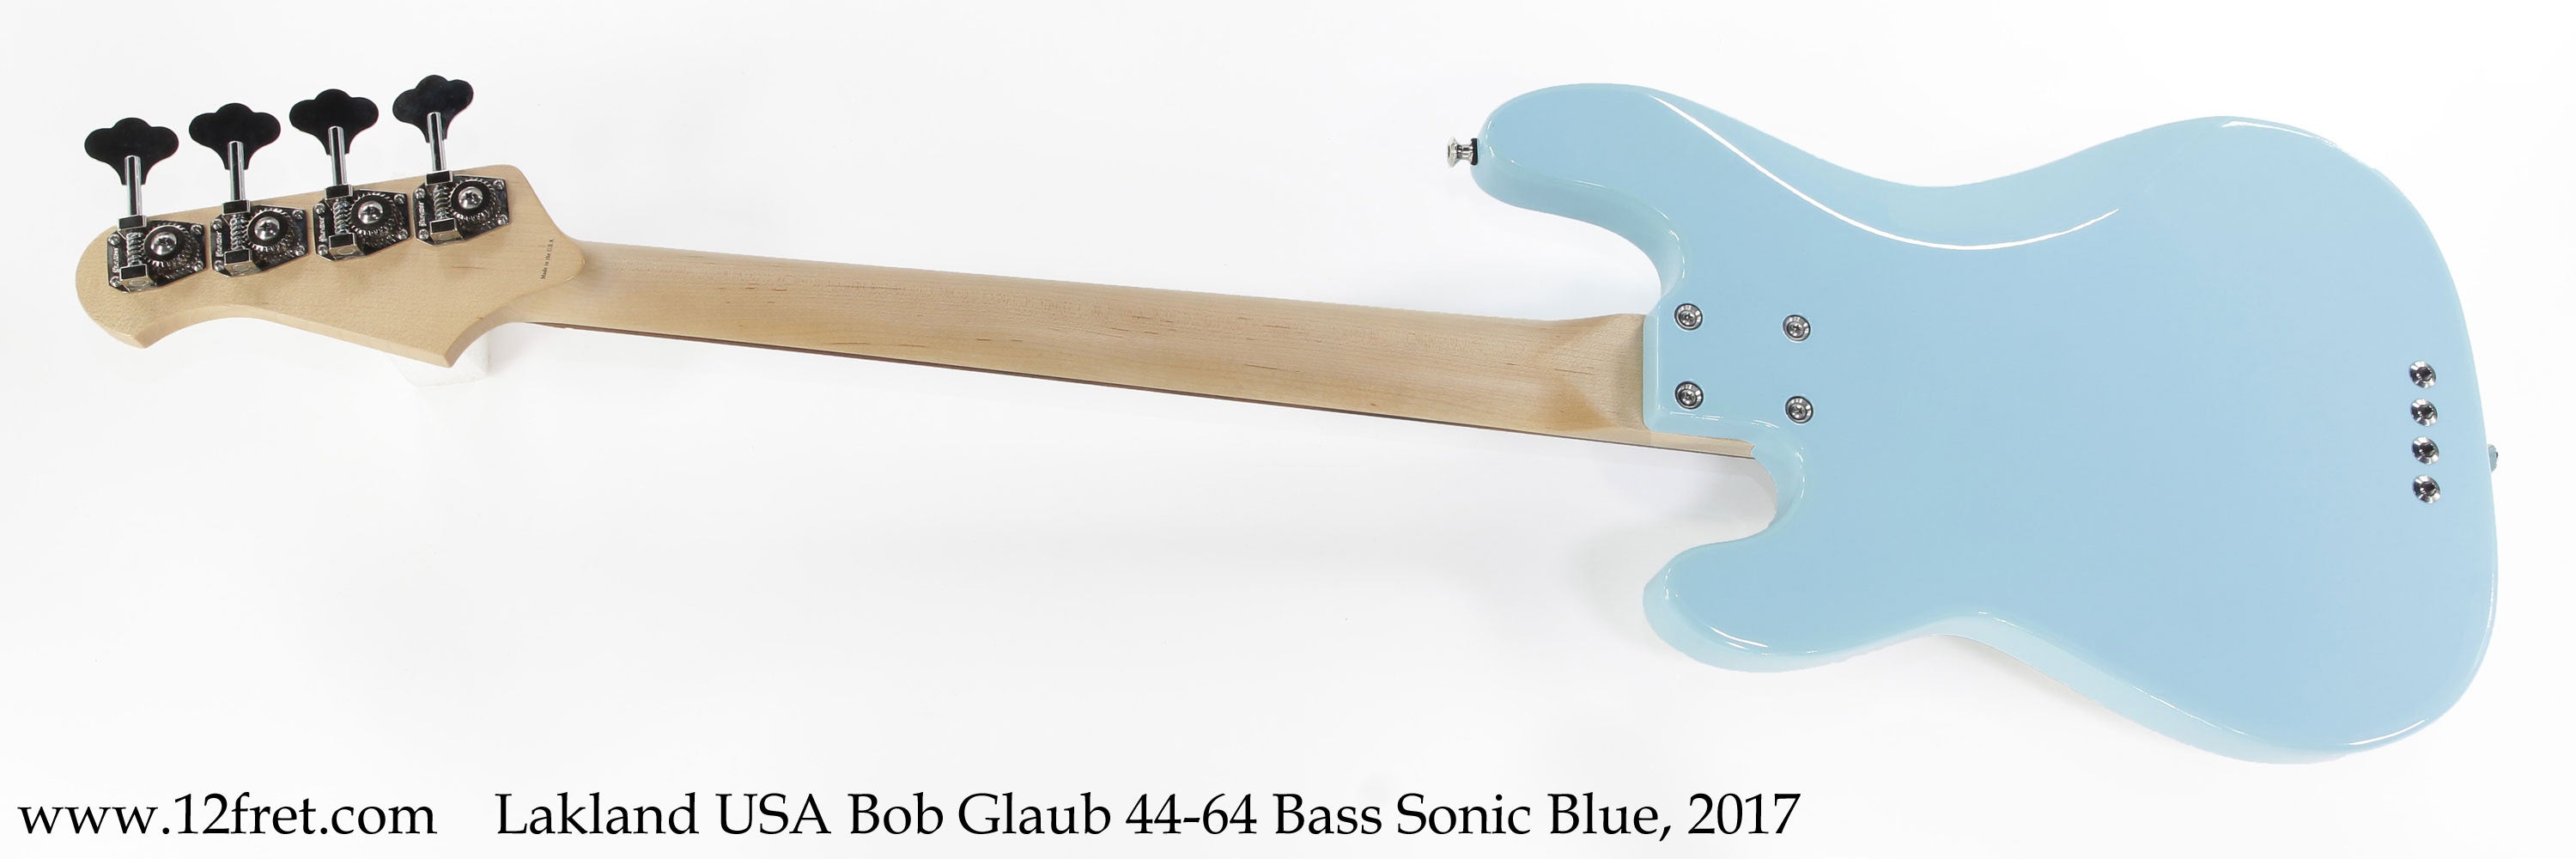 Lakland USA Bob Glaub 44-64 Bass Sonic Blue, 2017 - The Twelfth Fret